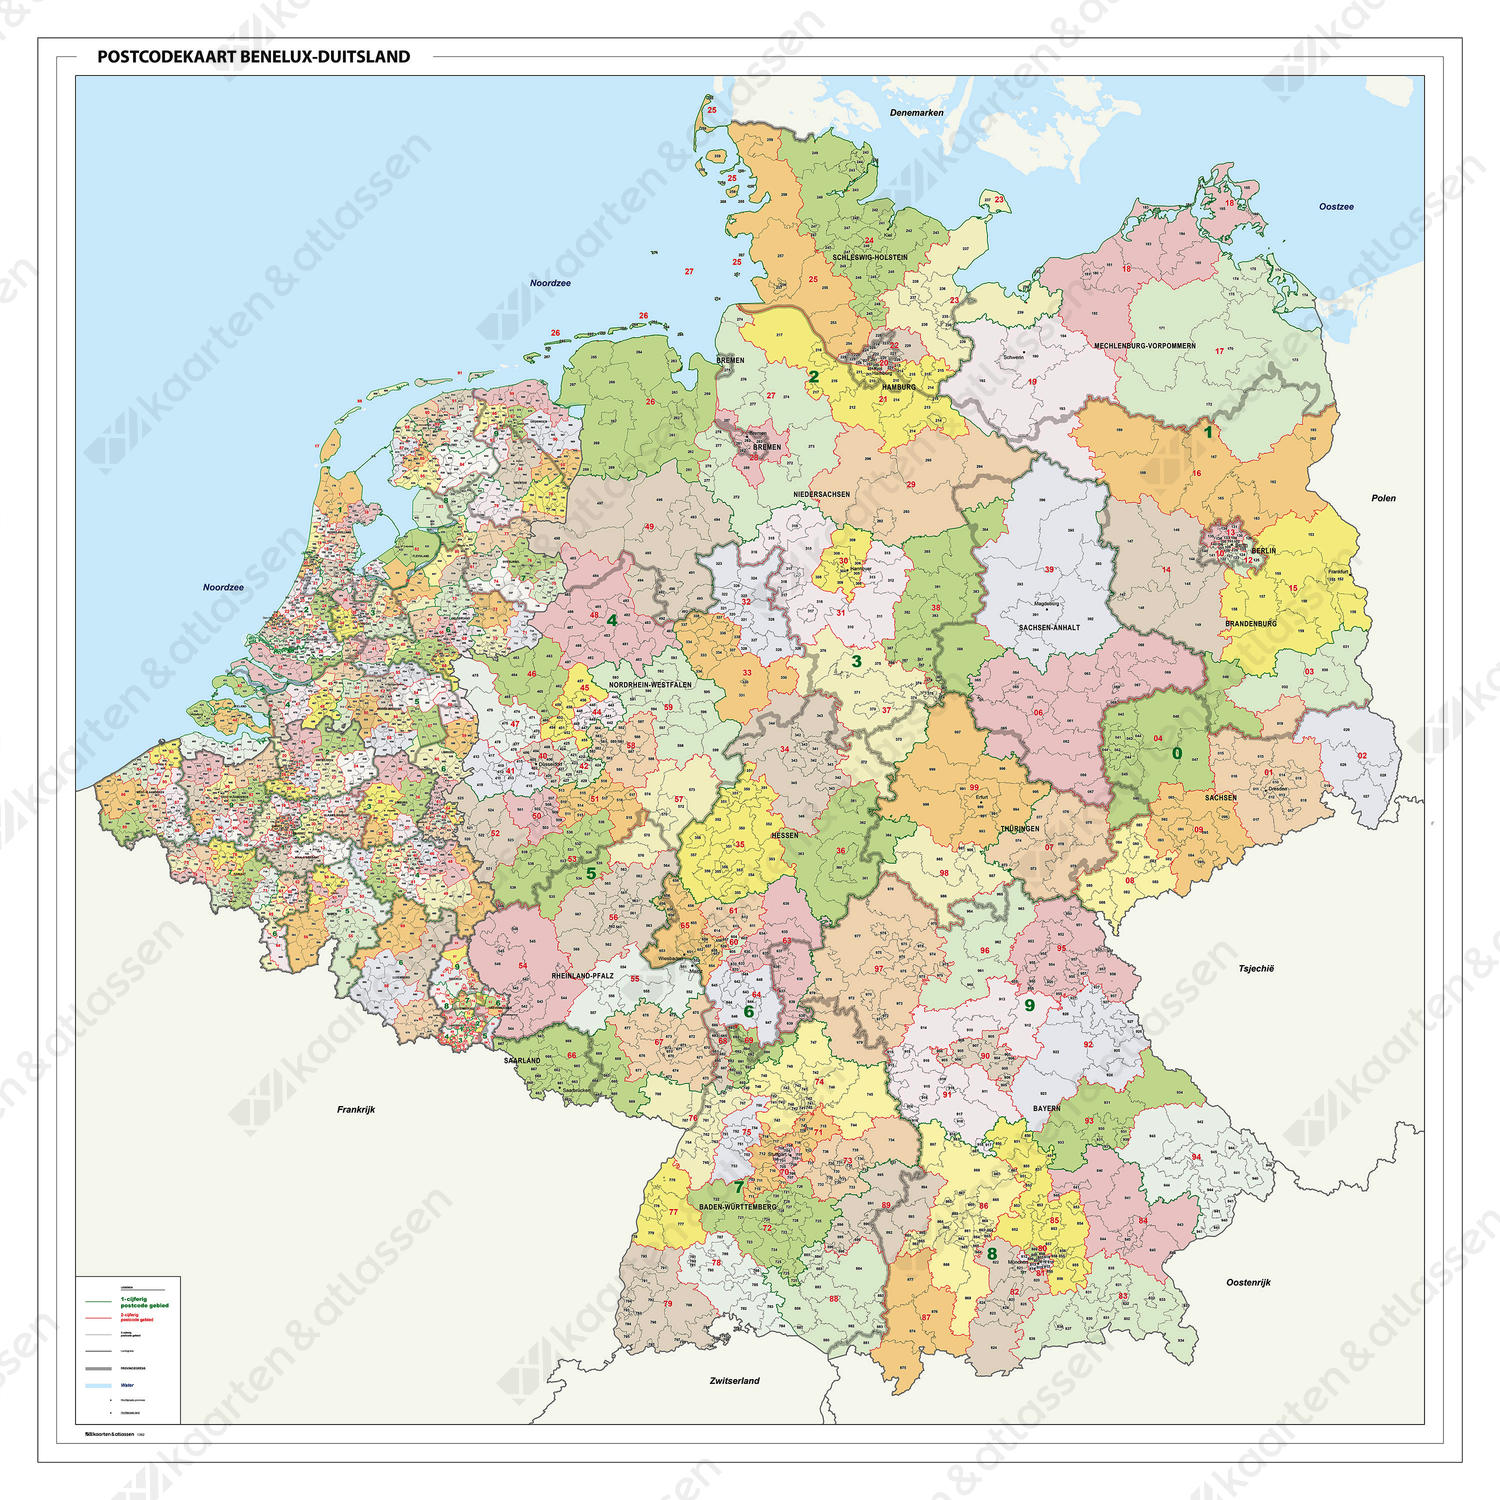 Digitale Postcodekaart Benelux + Duitsland 3-cijferig